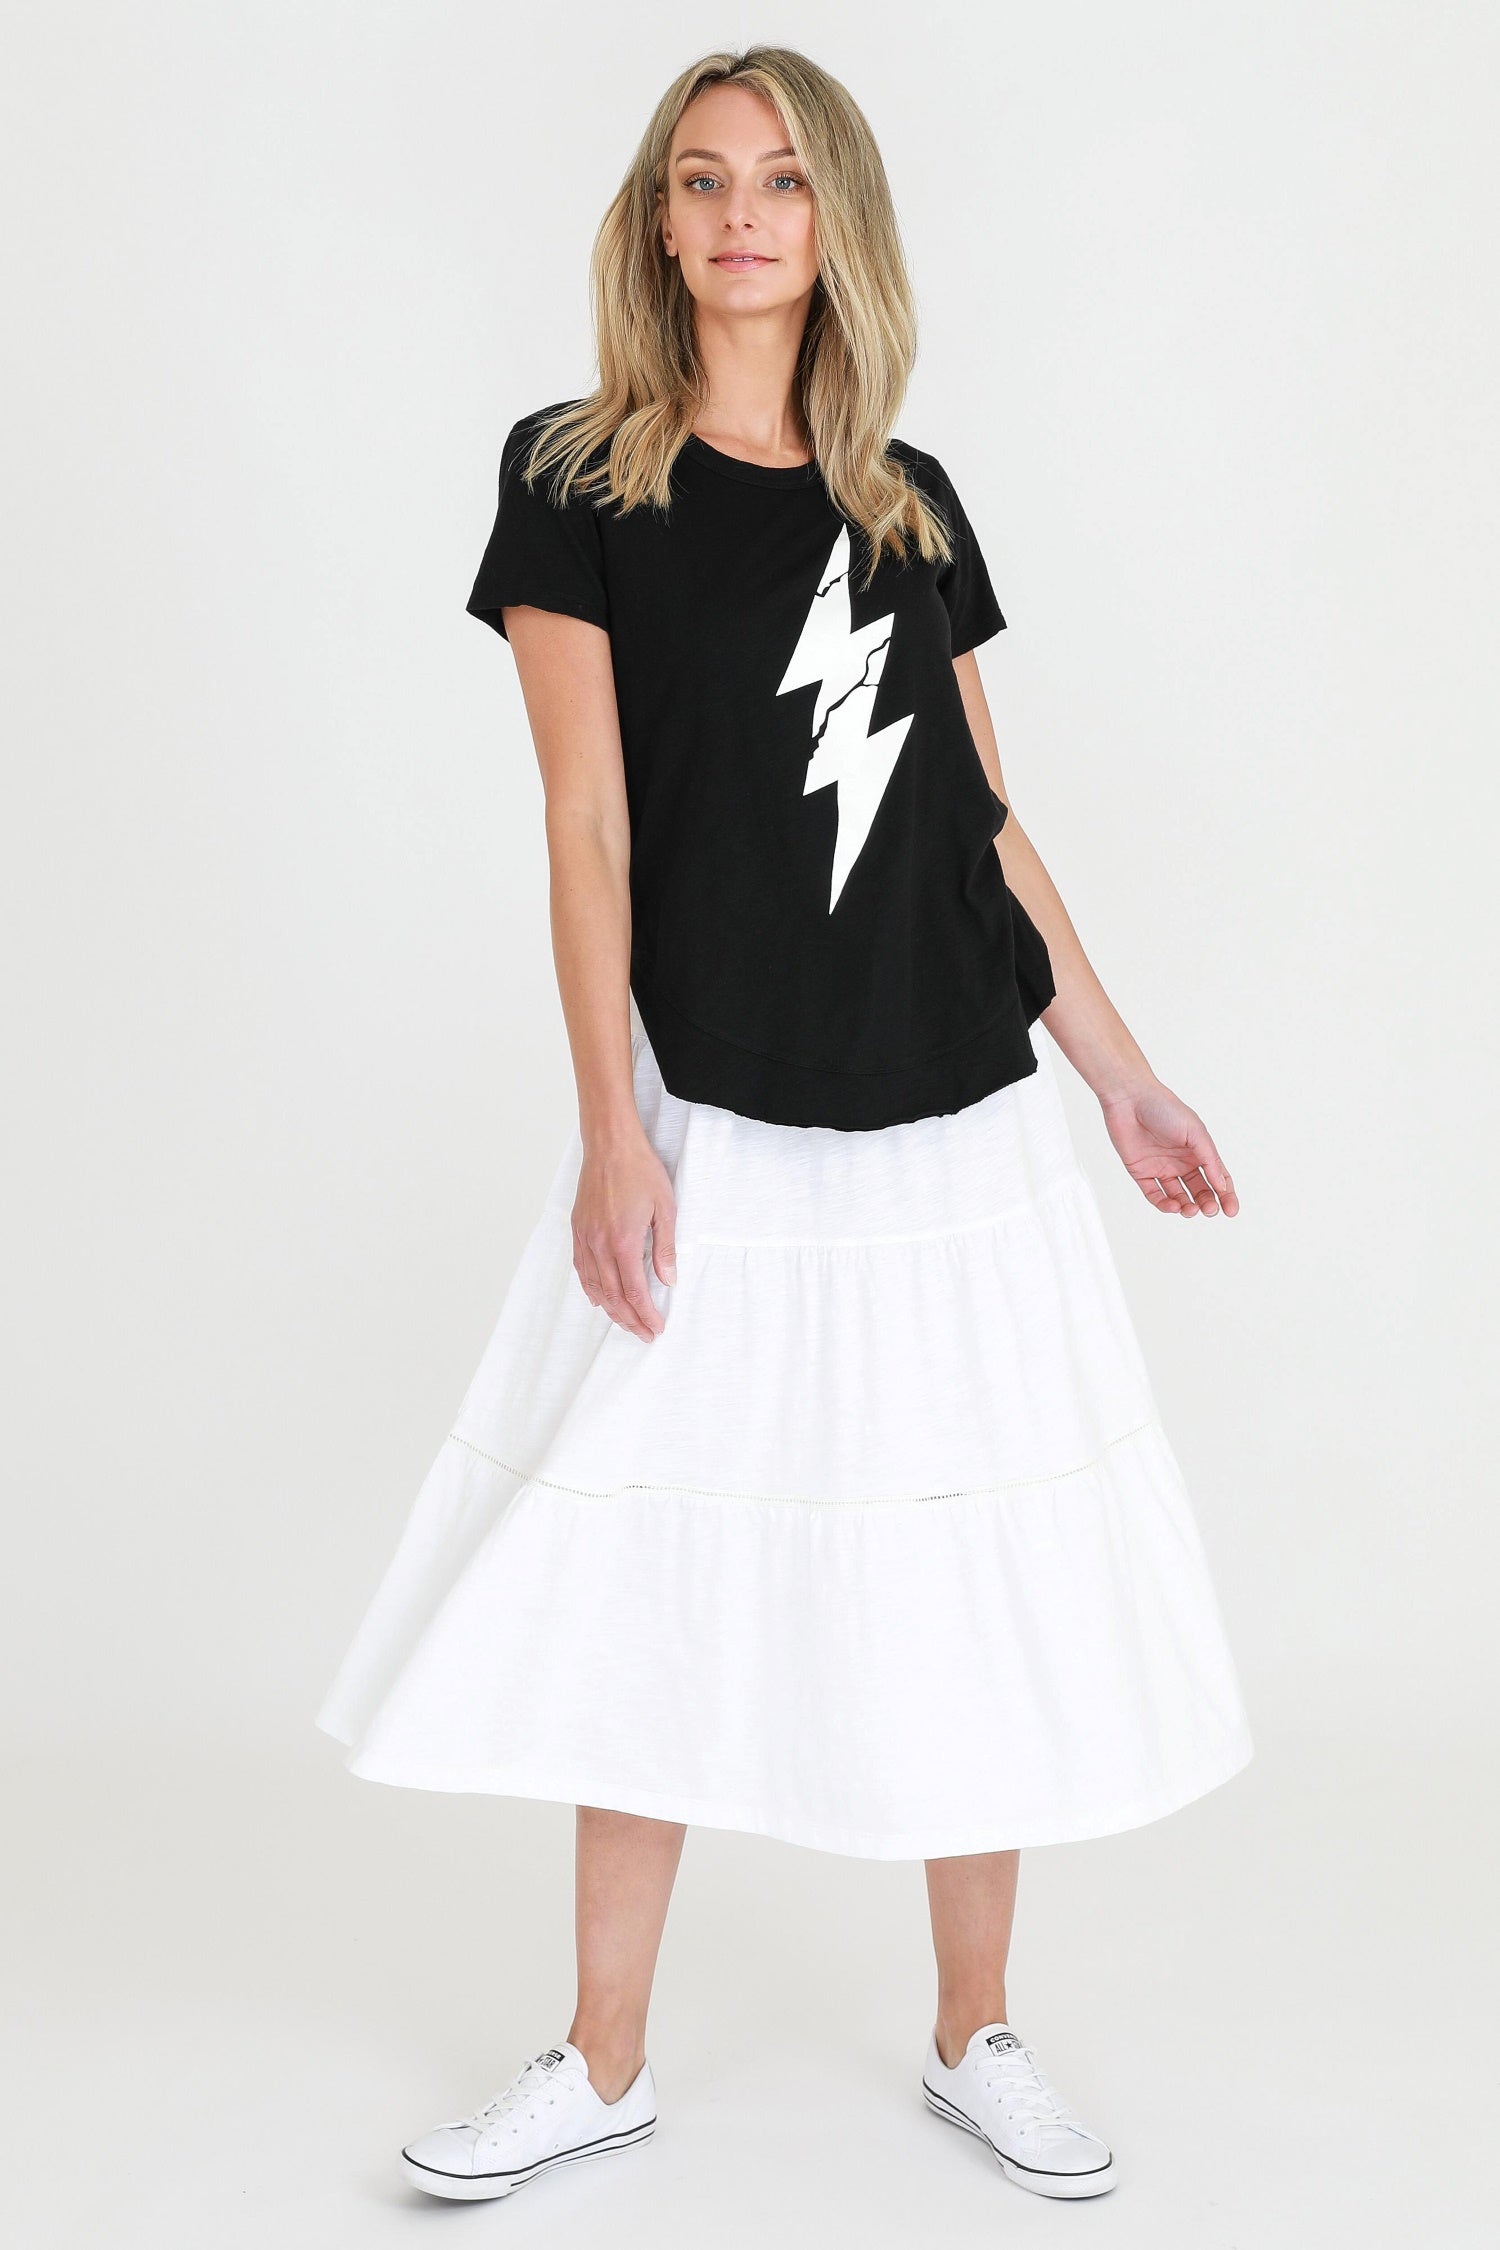 Madeline Lightning Flash Graphic T Shirt